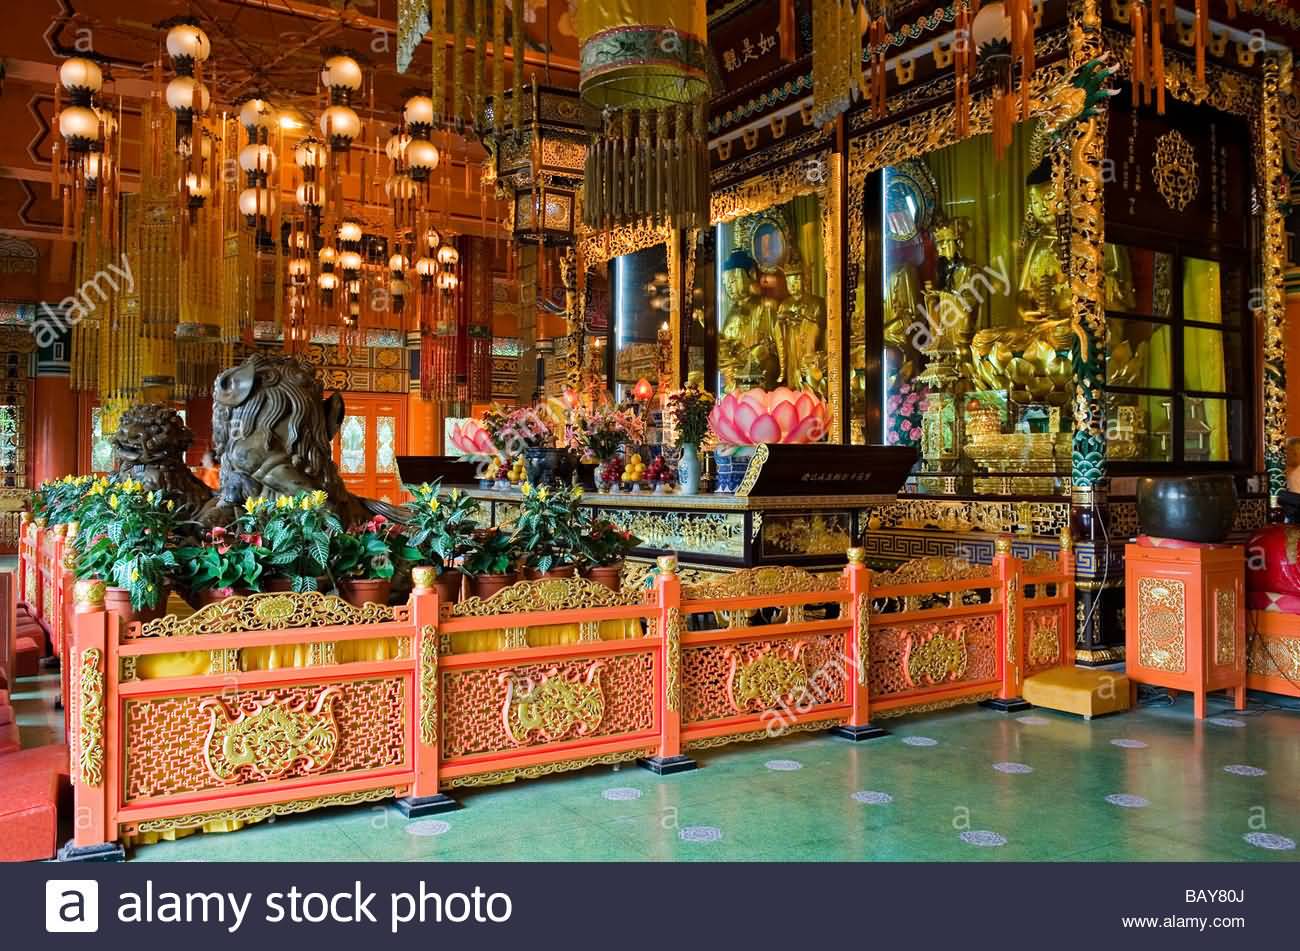 The Main Alrtar Inside The Hall Of Great Hero Of Po Lin Monastery